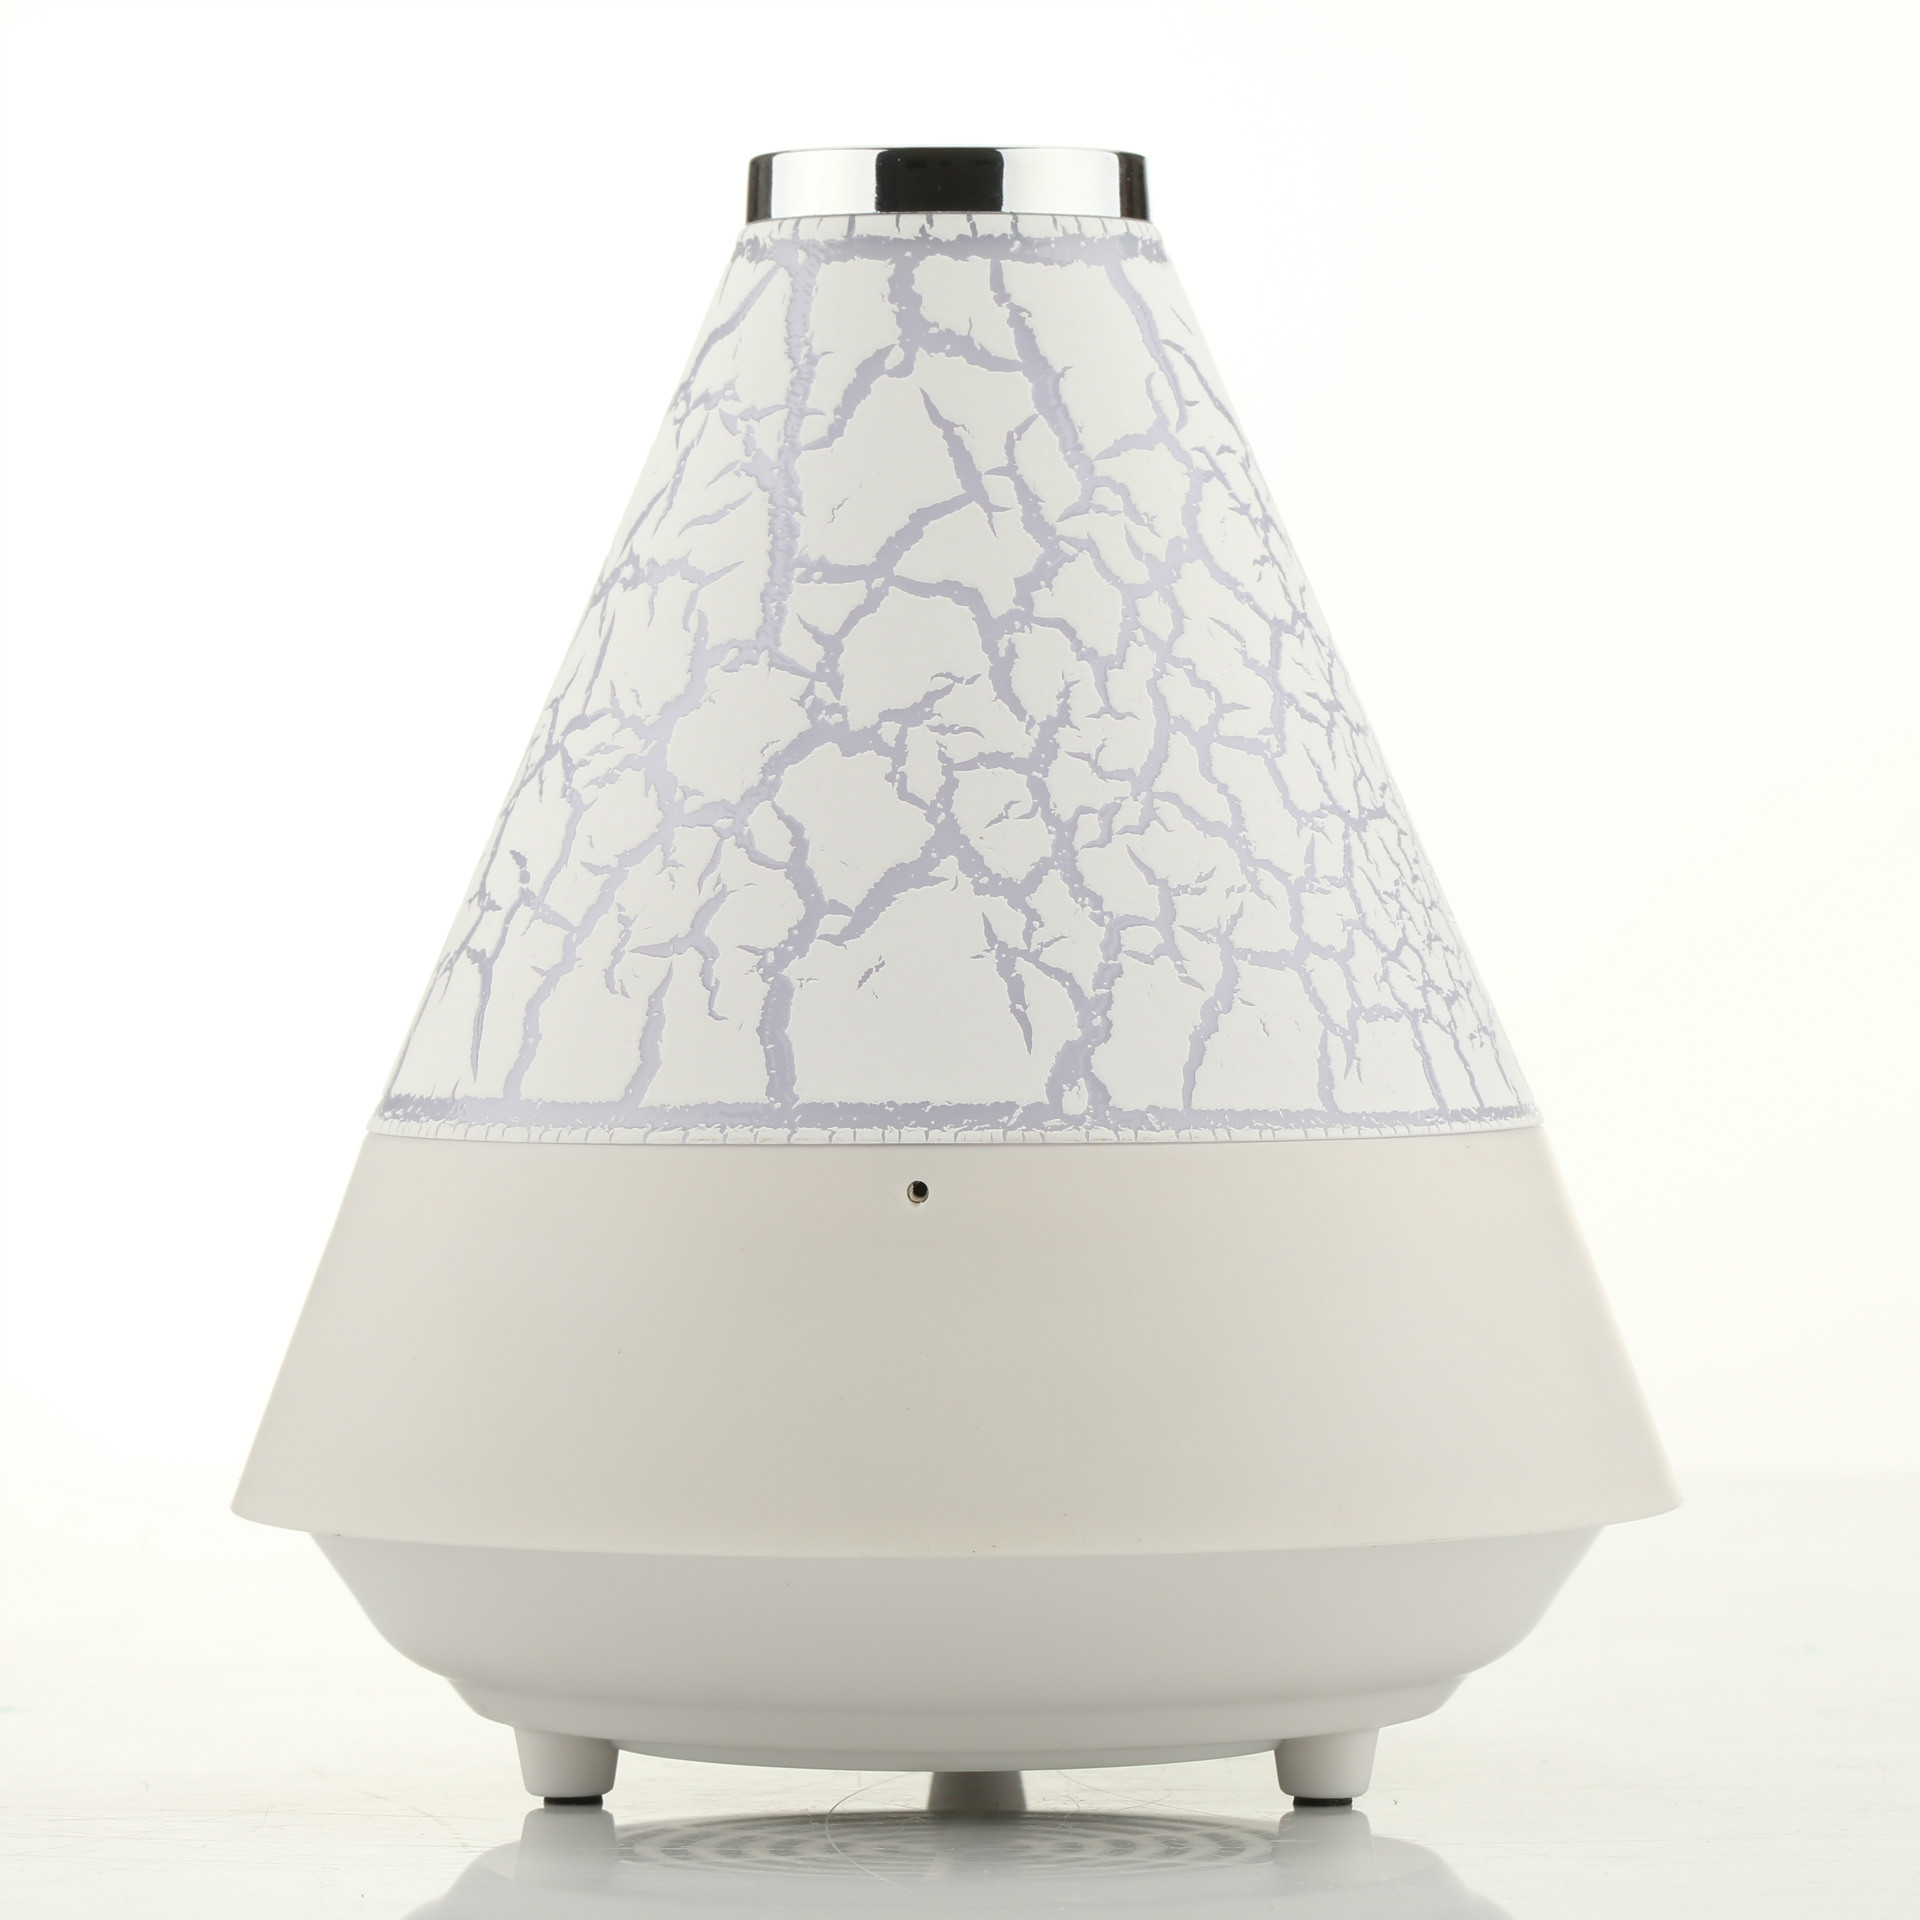 LED Funnel Shaped Night Light Wireless Speaker with FM Radio